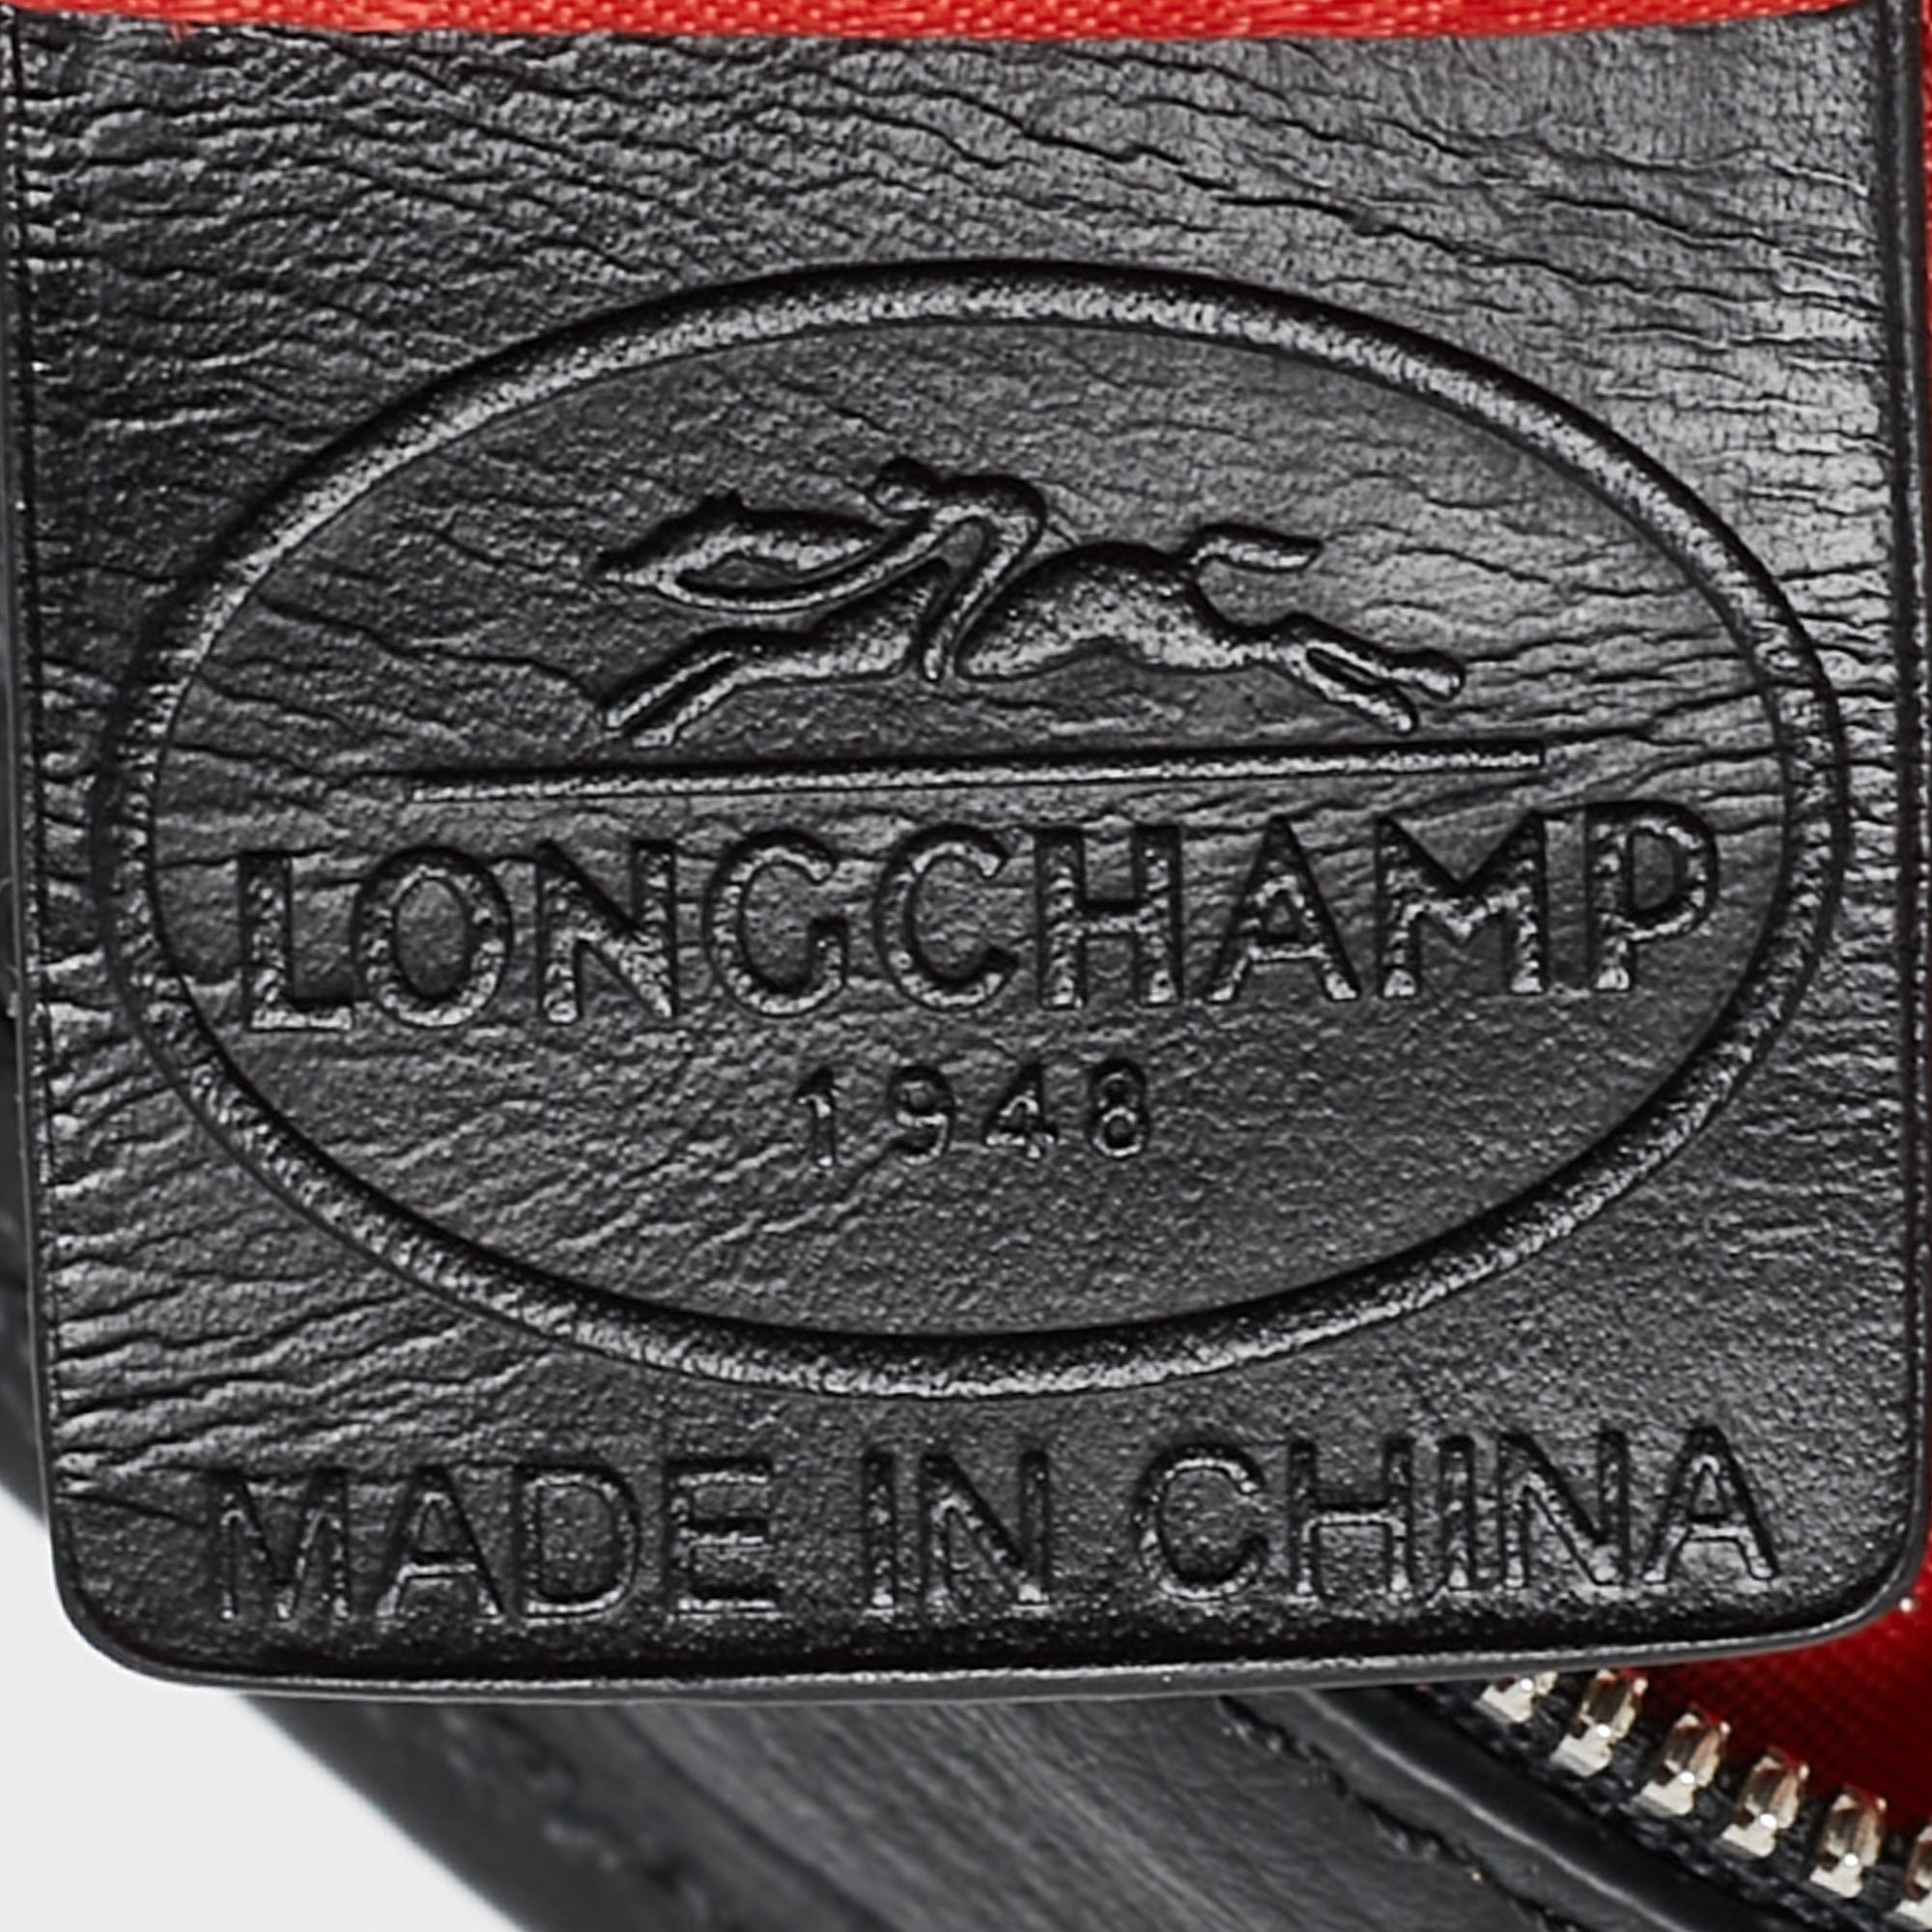 Longchamp Black Leather Shopper Tote